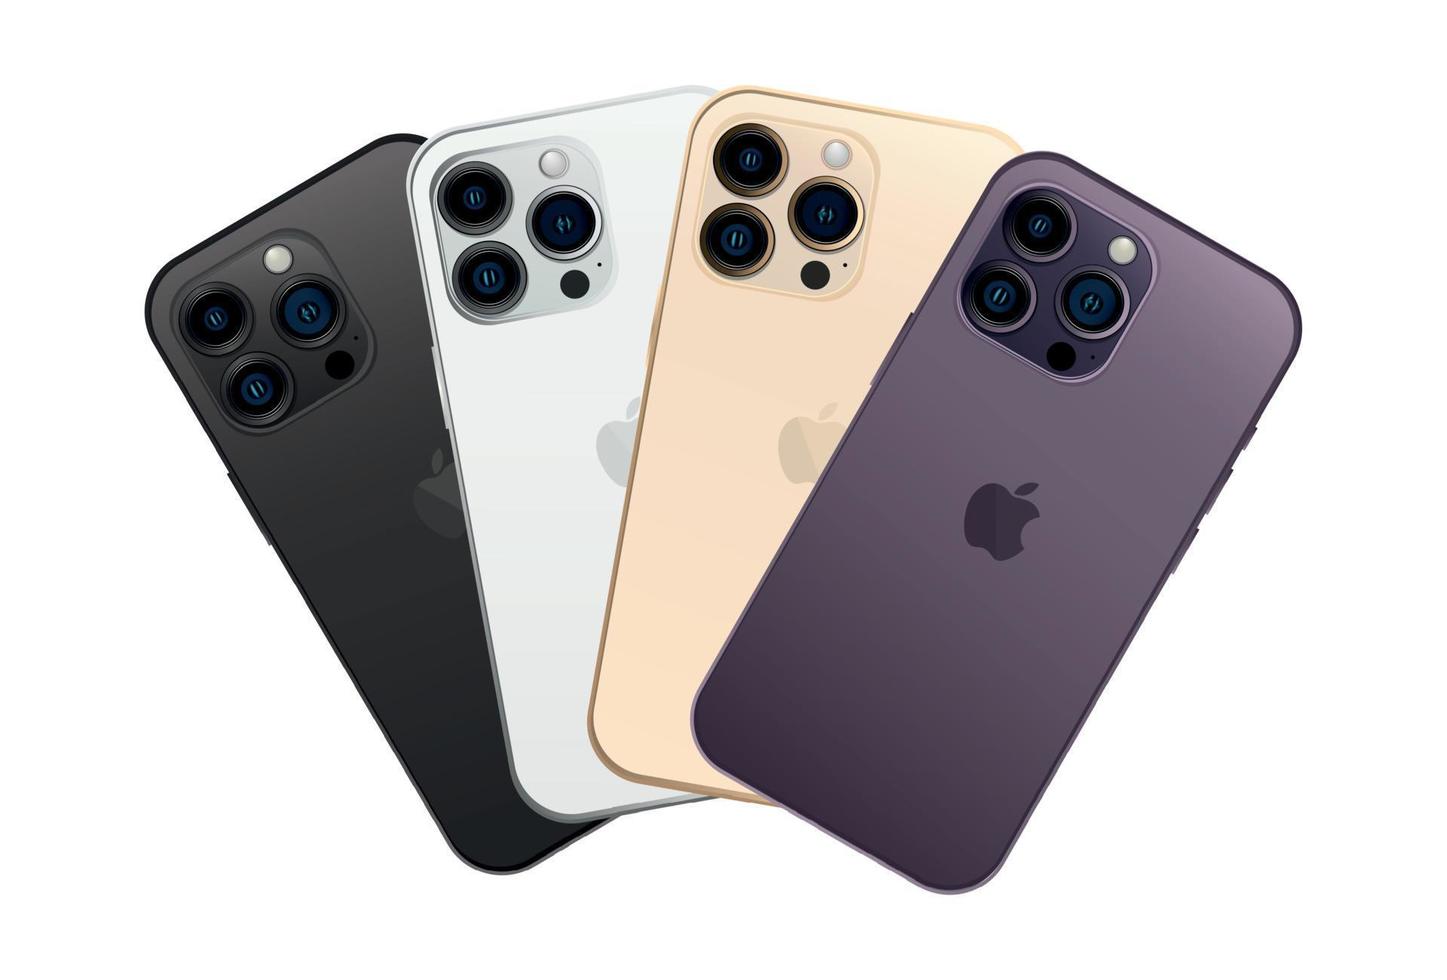 new-apple-iphone-14-pro-modern-smartphone-gadget-set-of-4-pcs-new-original-colors-free-vector.jpg